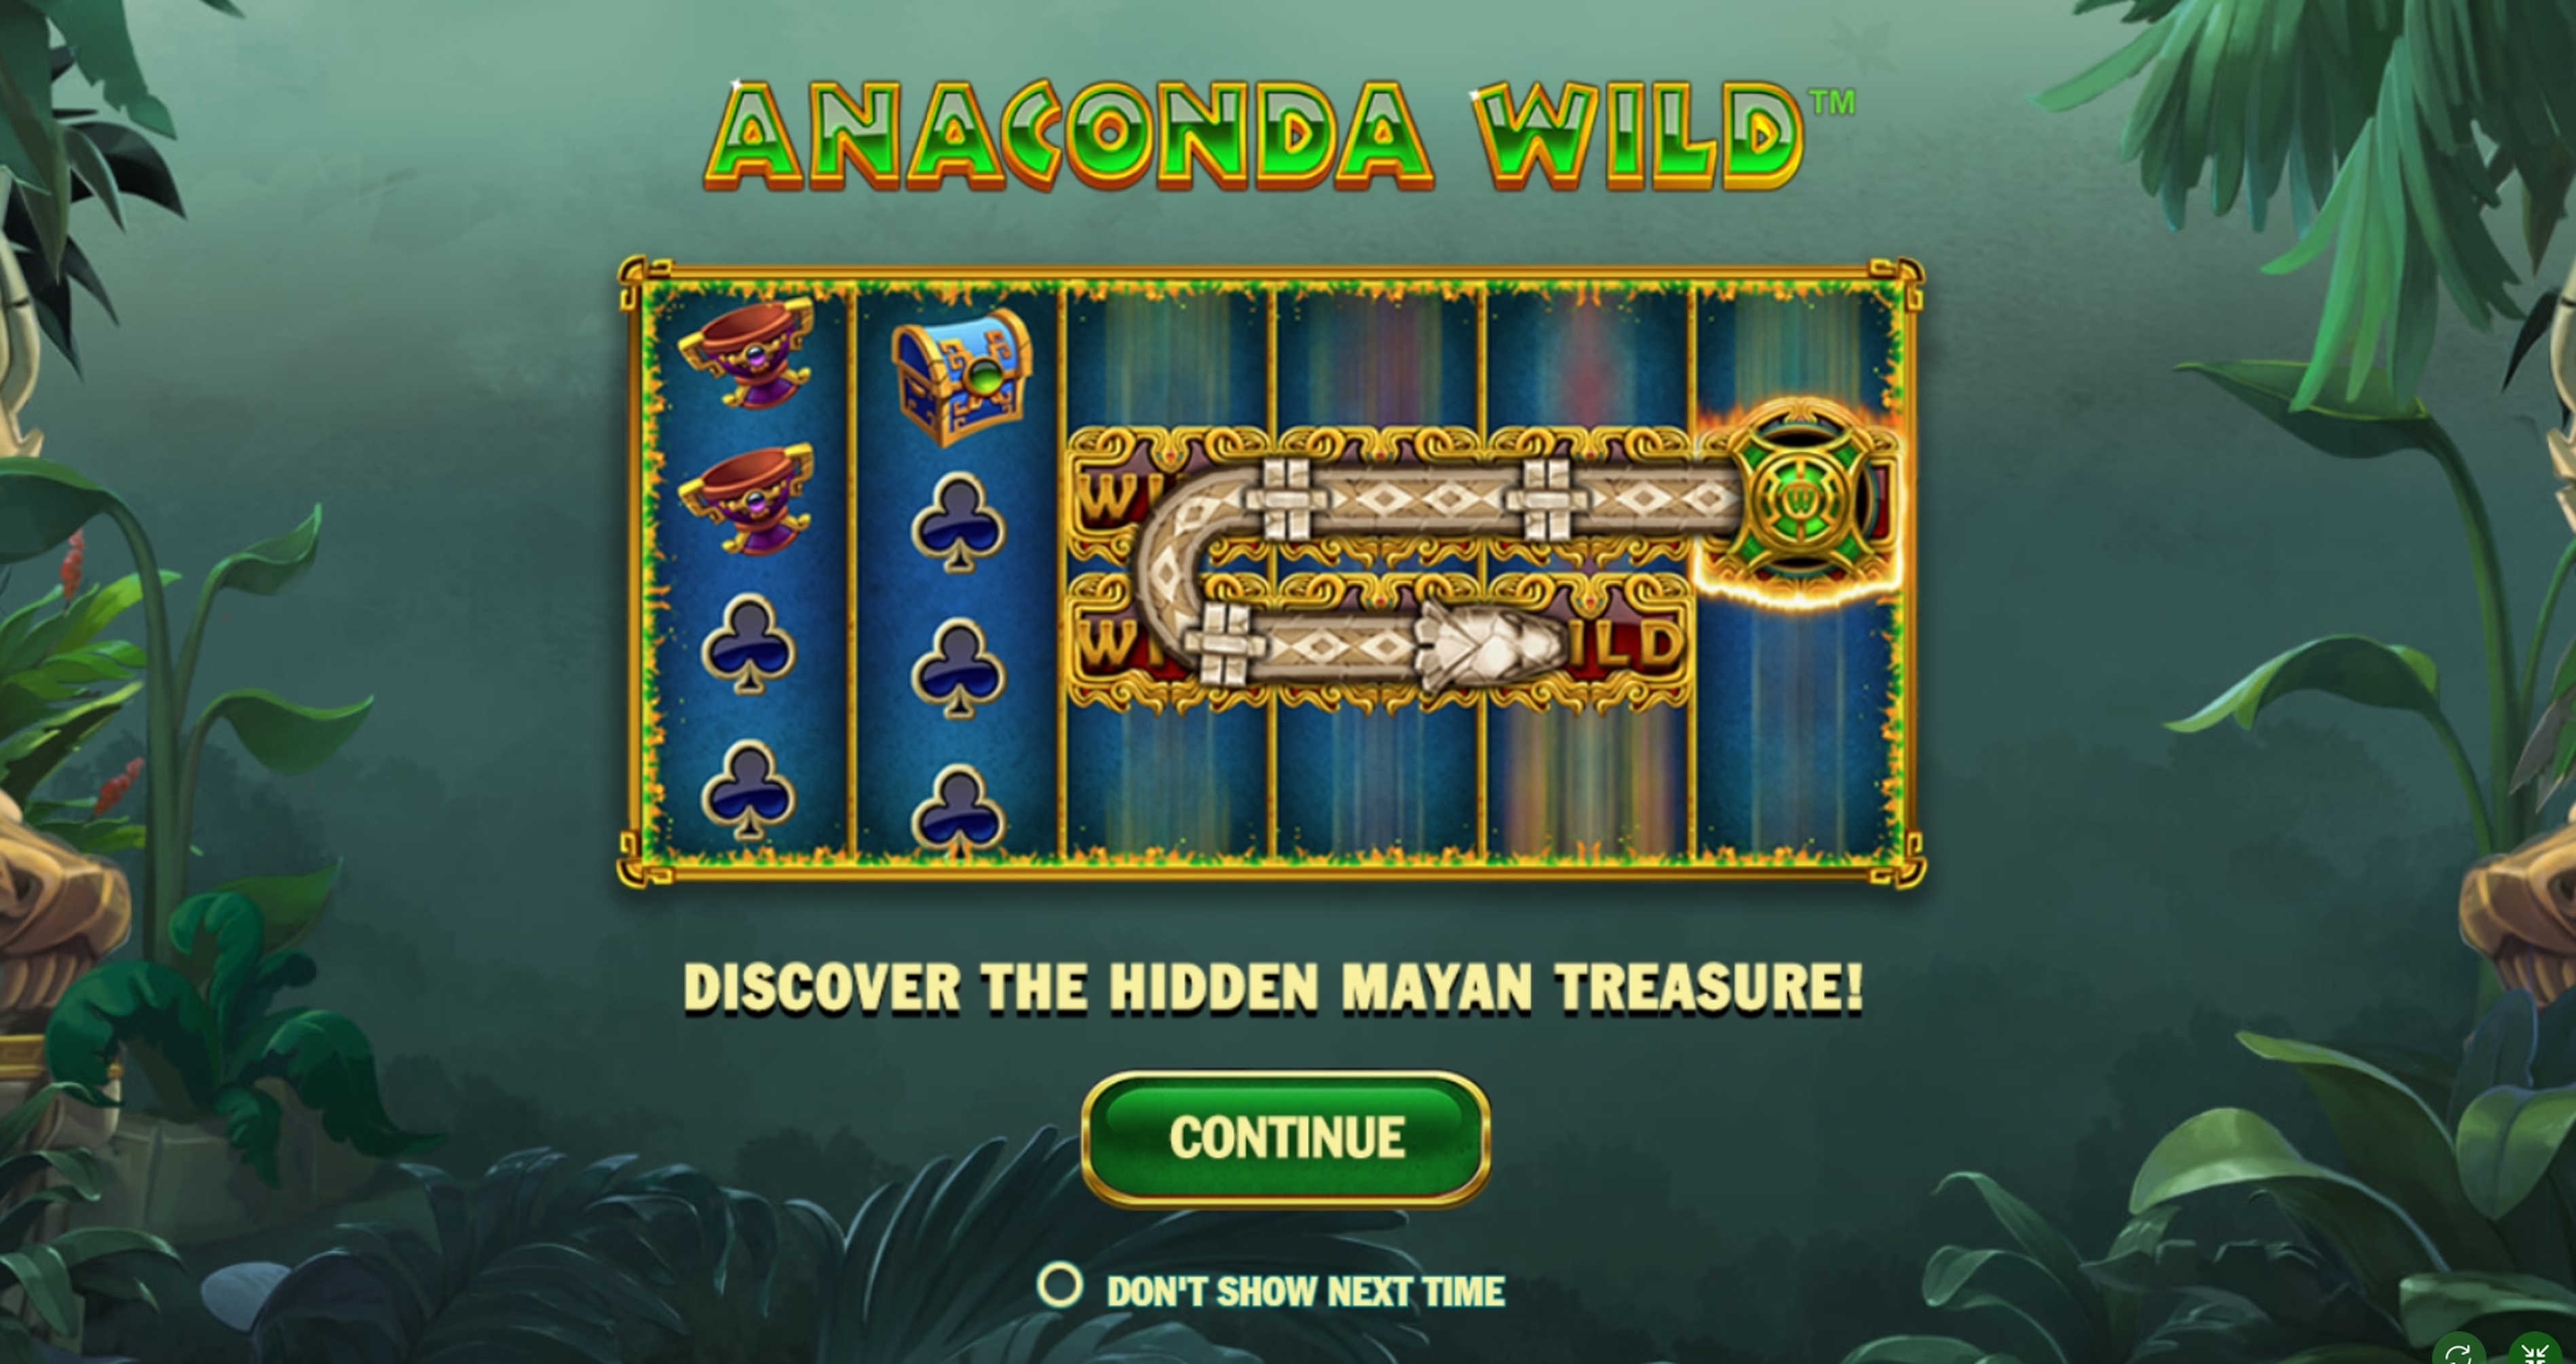 Play Anaconda Wild Free Casino Slot Game by Playtech